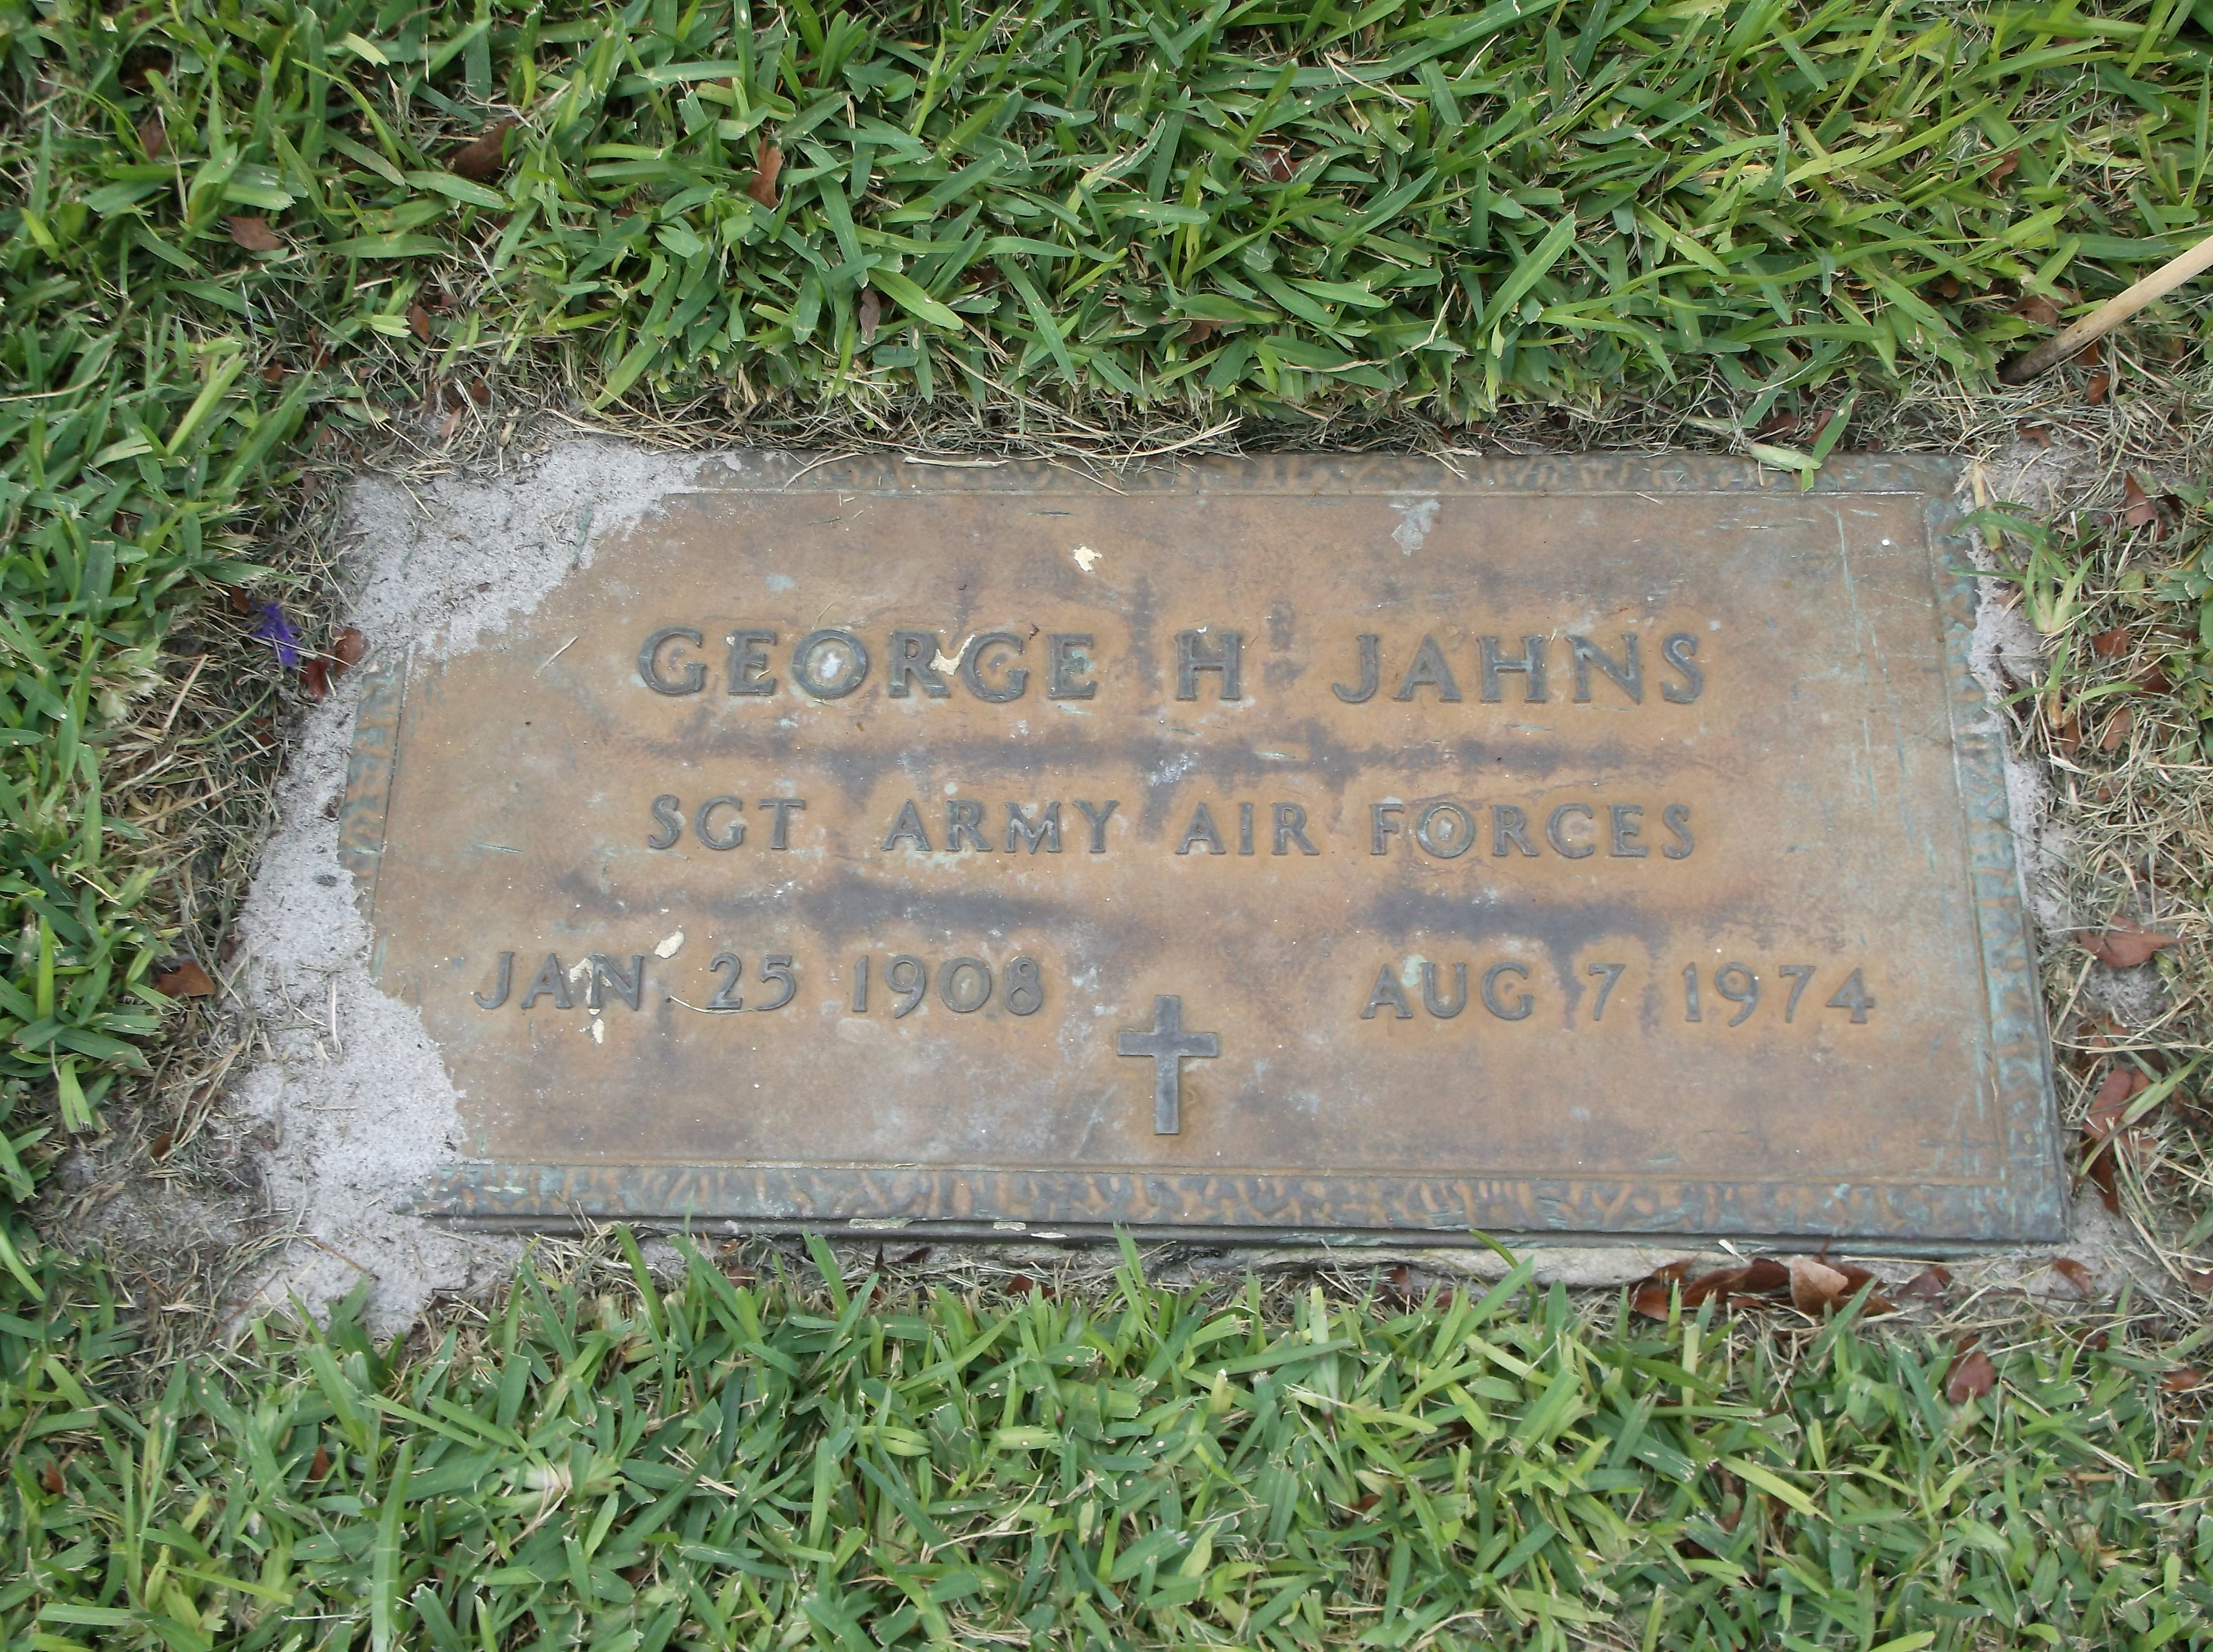 George H Jahns